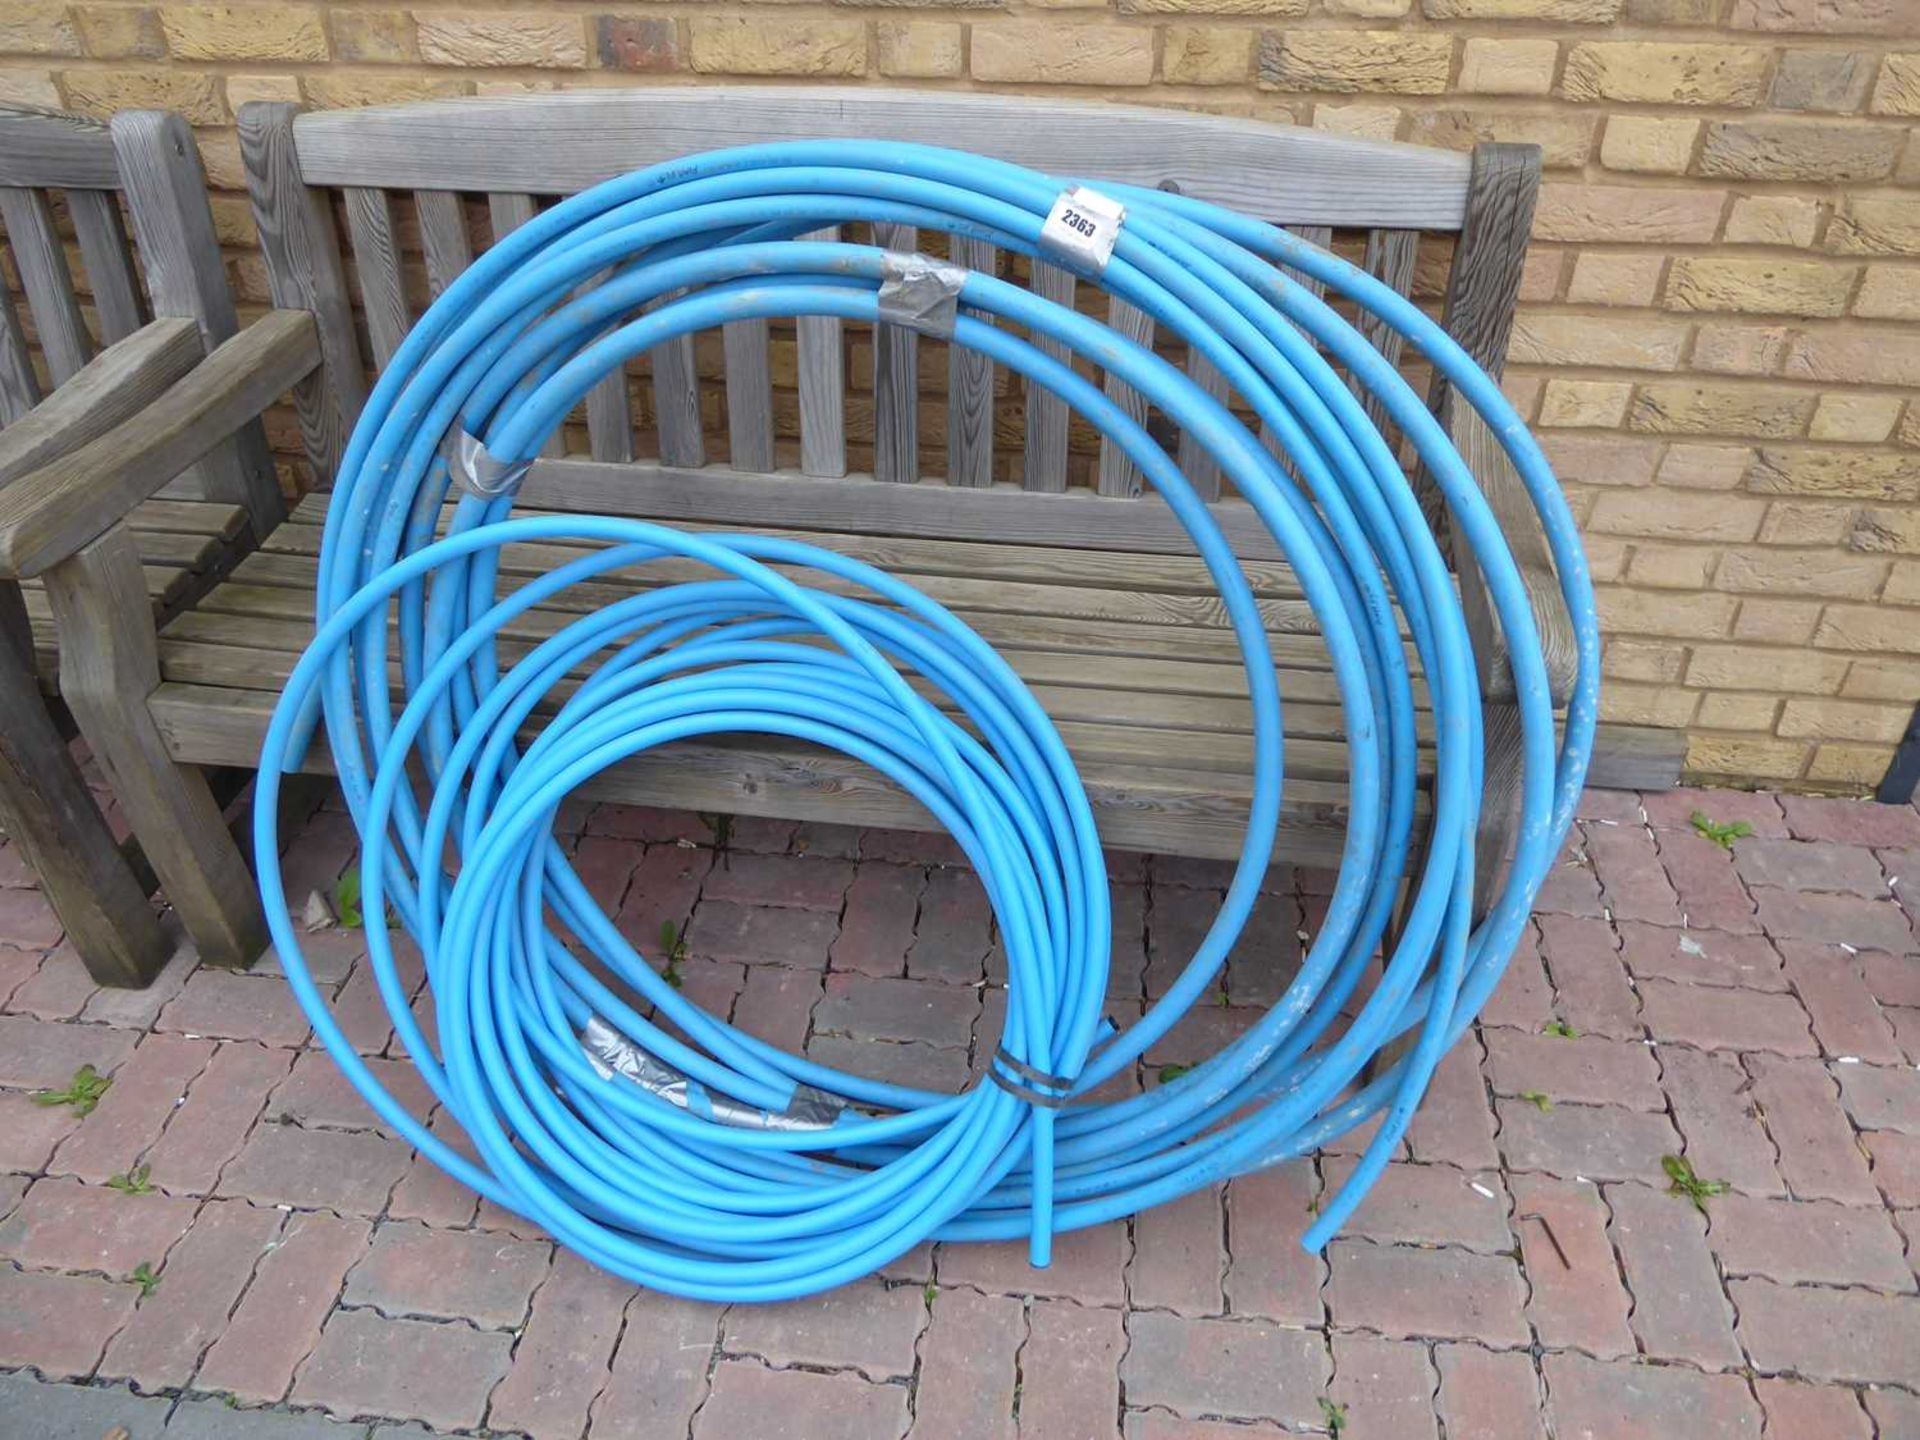 Quantity of blue irrigation hosing